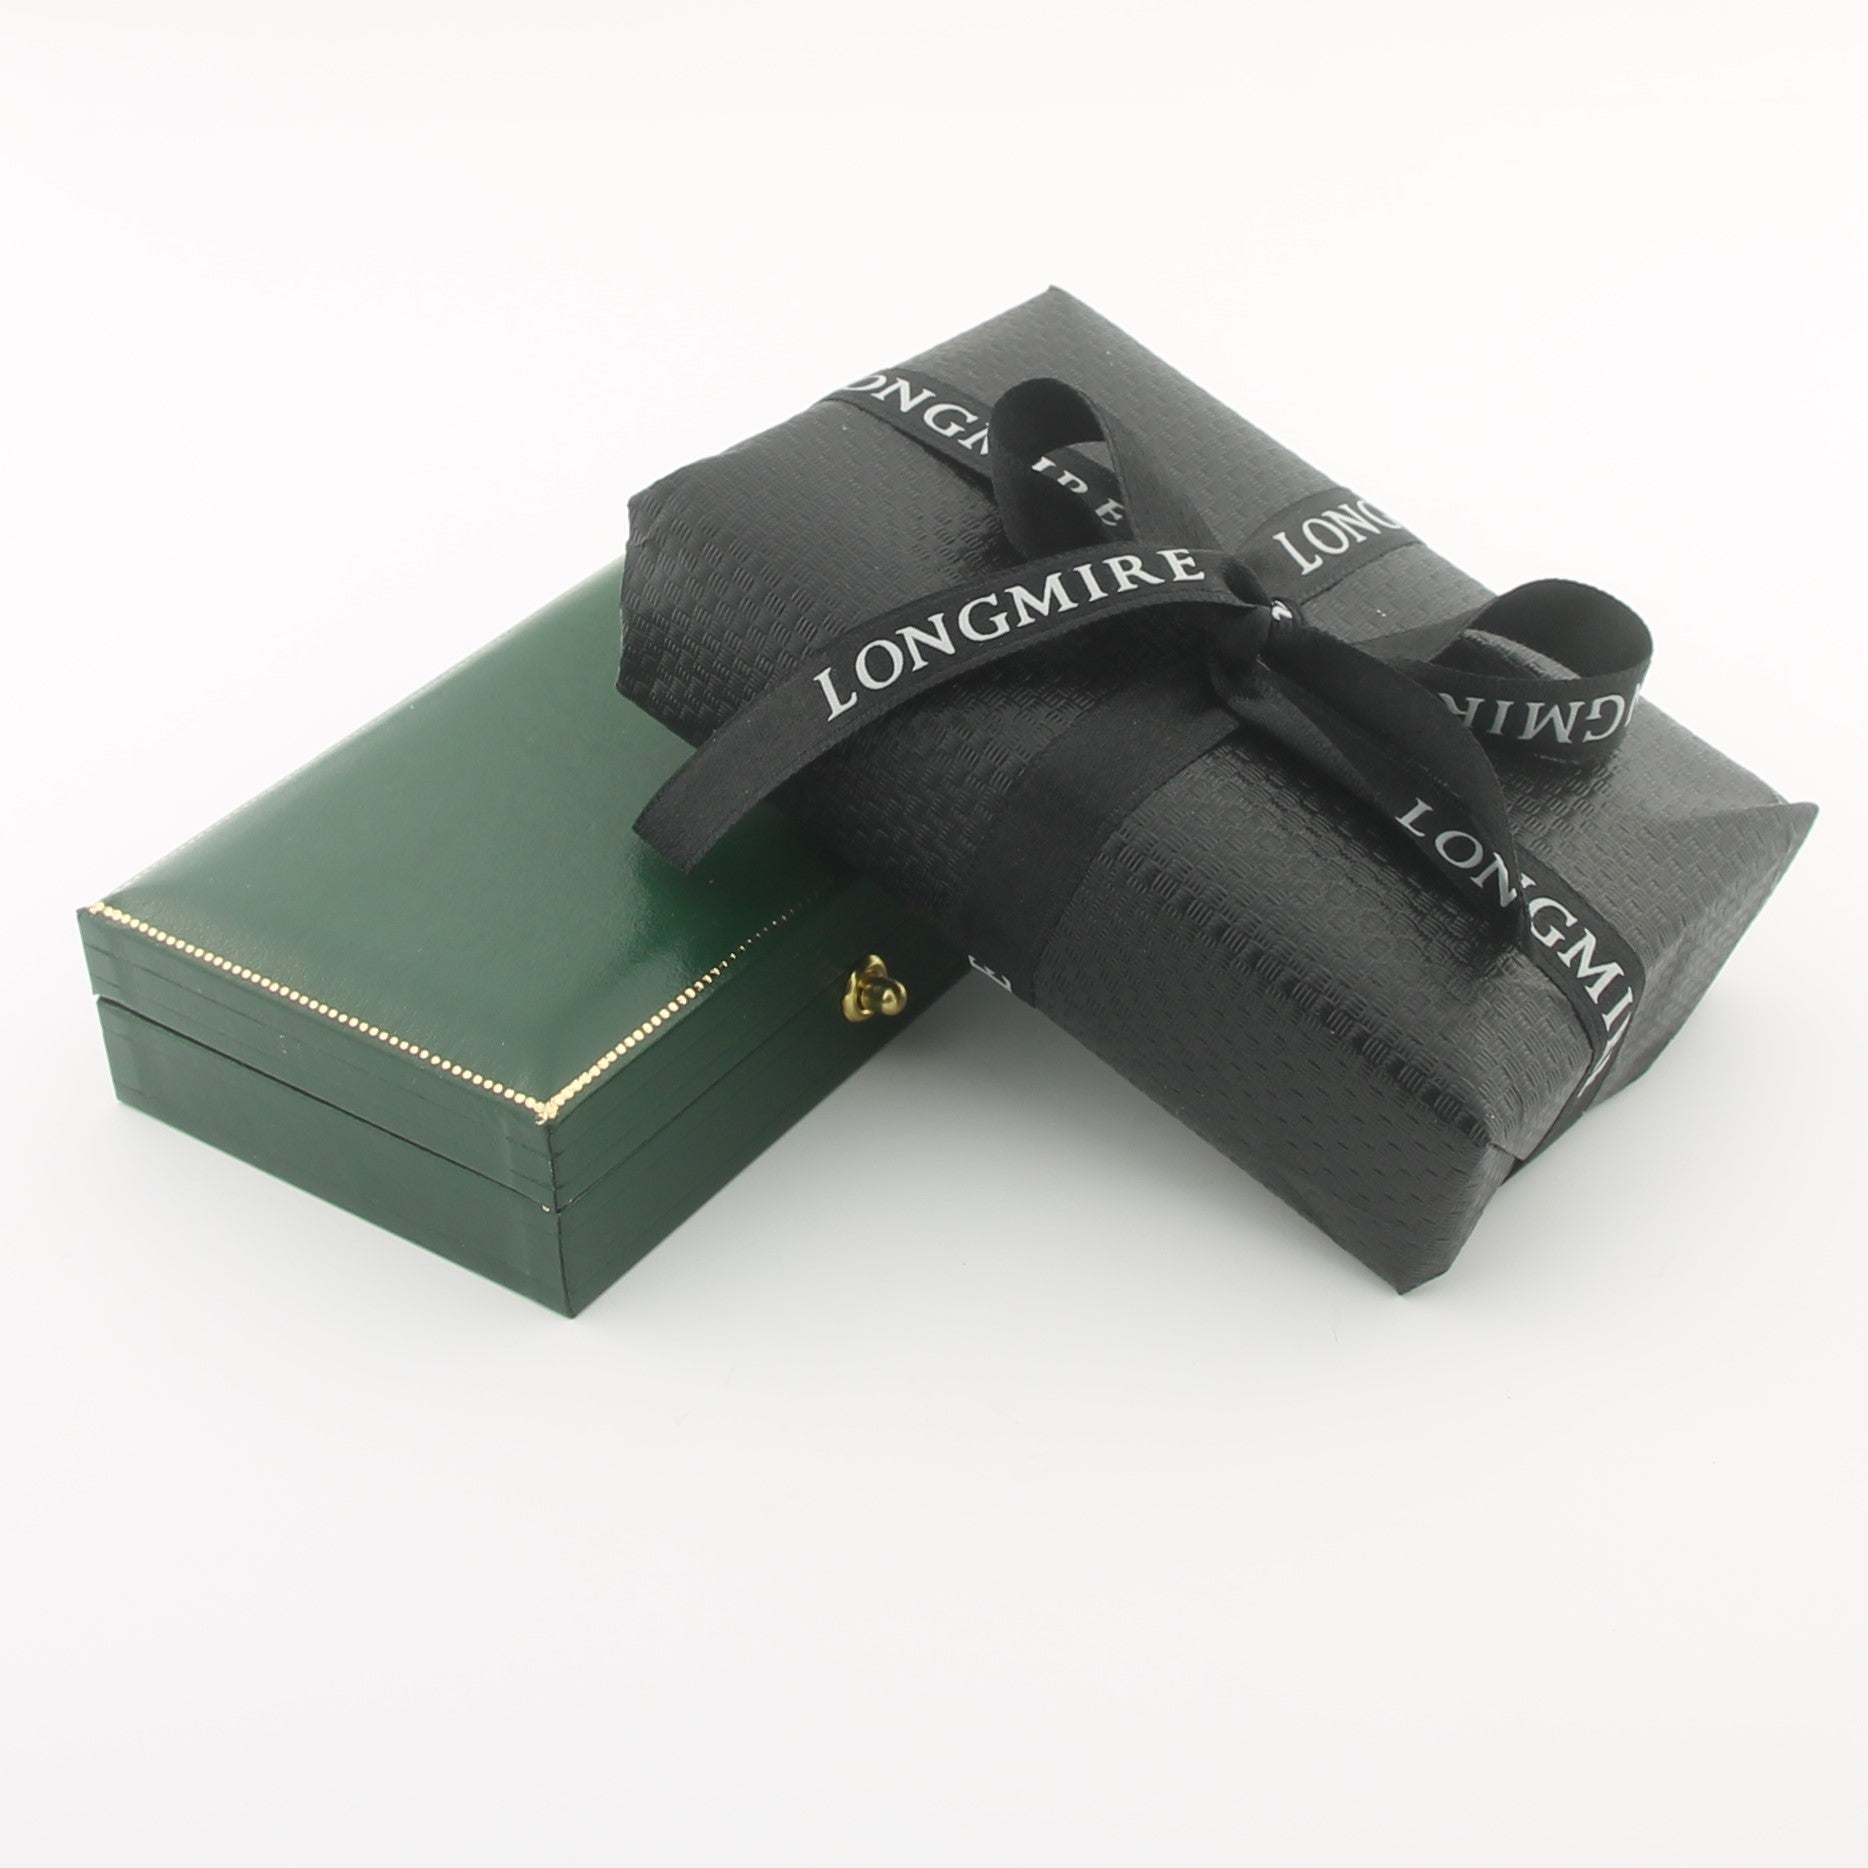 Longmire - wrapped gift box